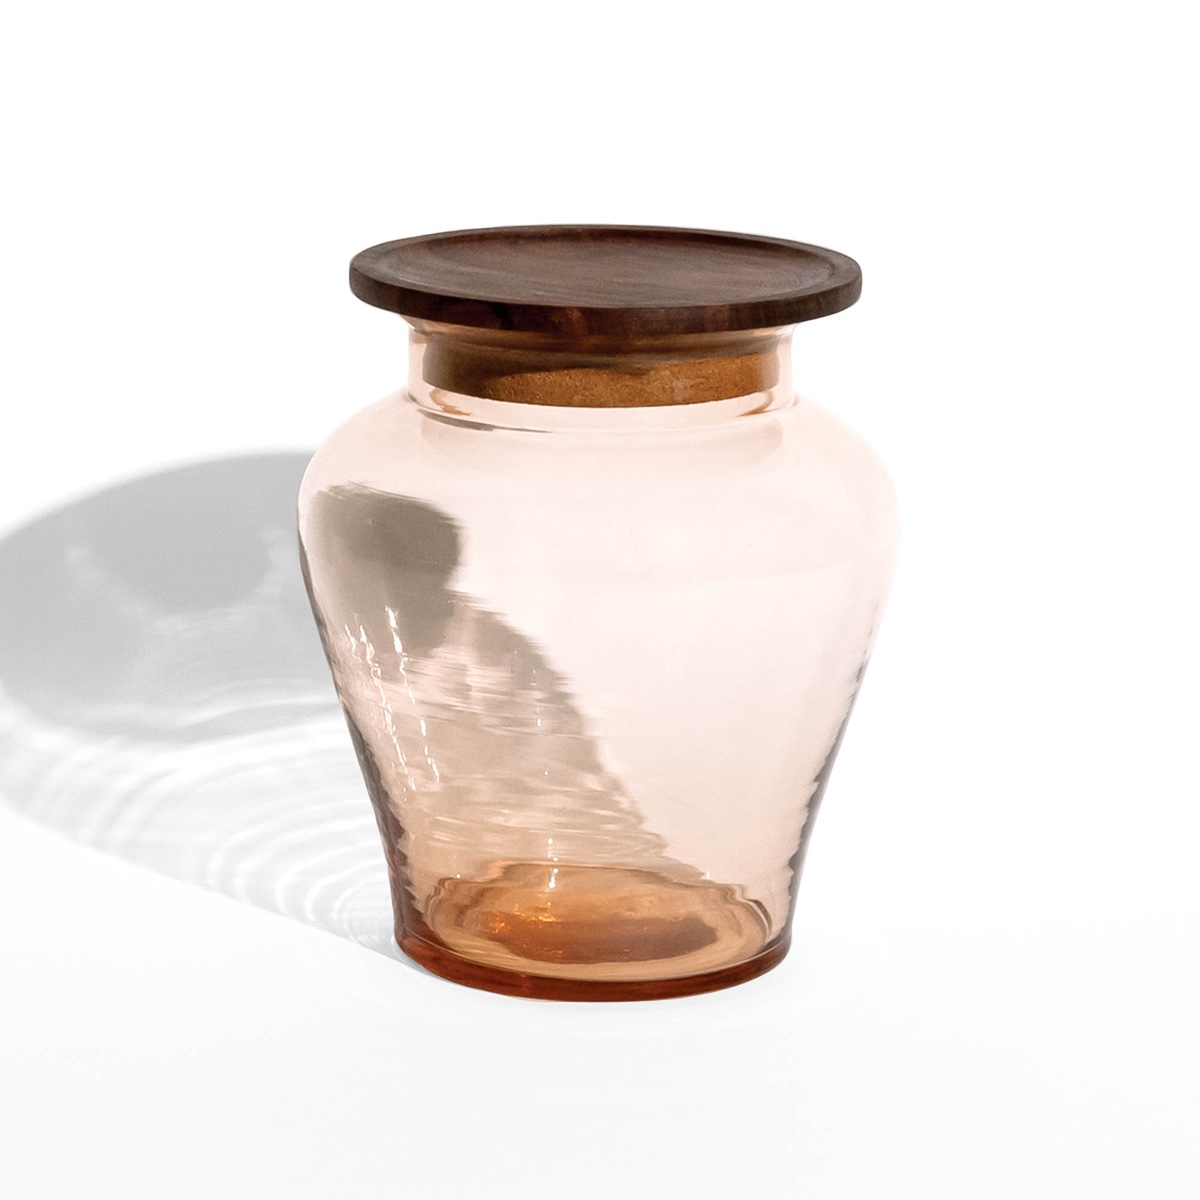 Rosa glass jar. Image via Tiipoi.